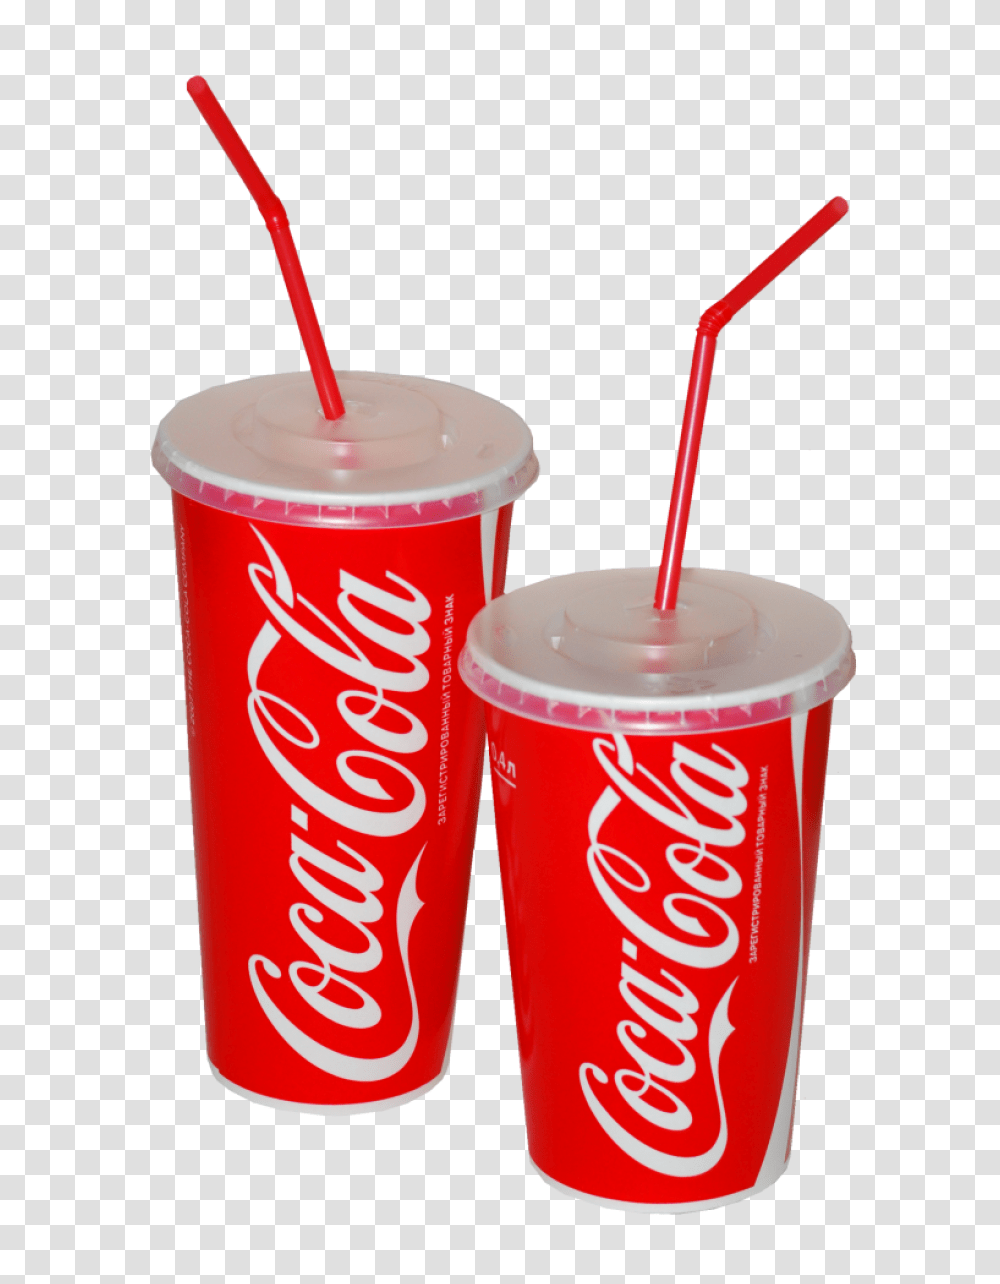 Download Coca Cola Image For Free Paper Coca Cola Cup, Soda, Beverage, Drink, Coke Transparent Png